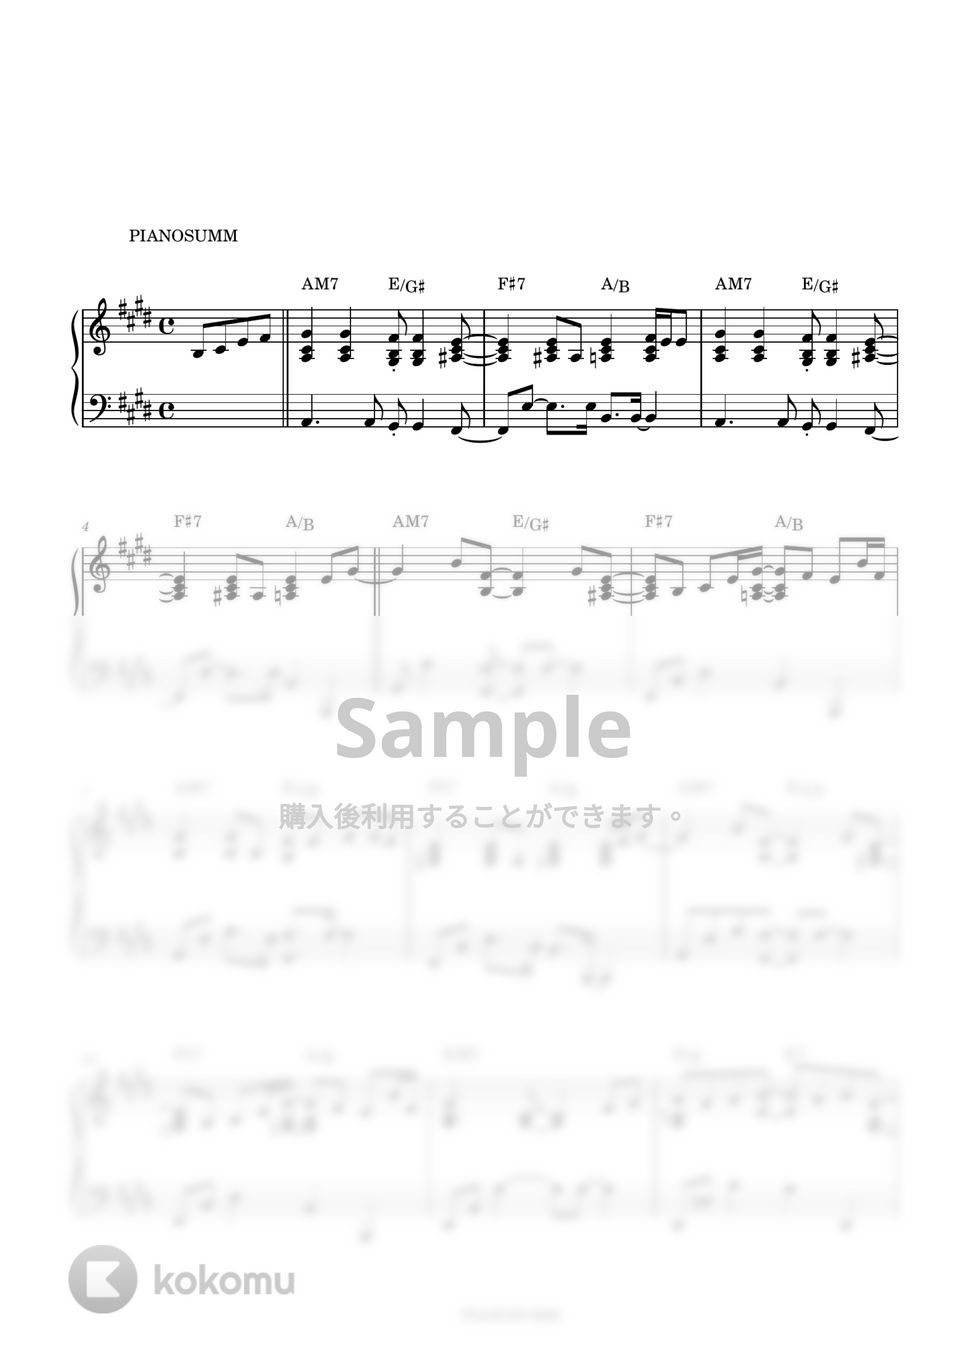 MeloMance(멜로망스) - Gift(선물) by PIANOSUMM